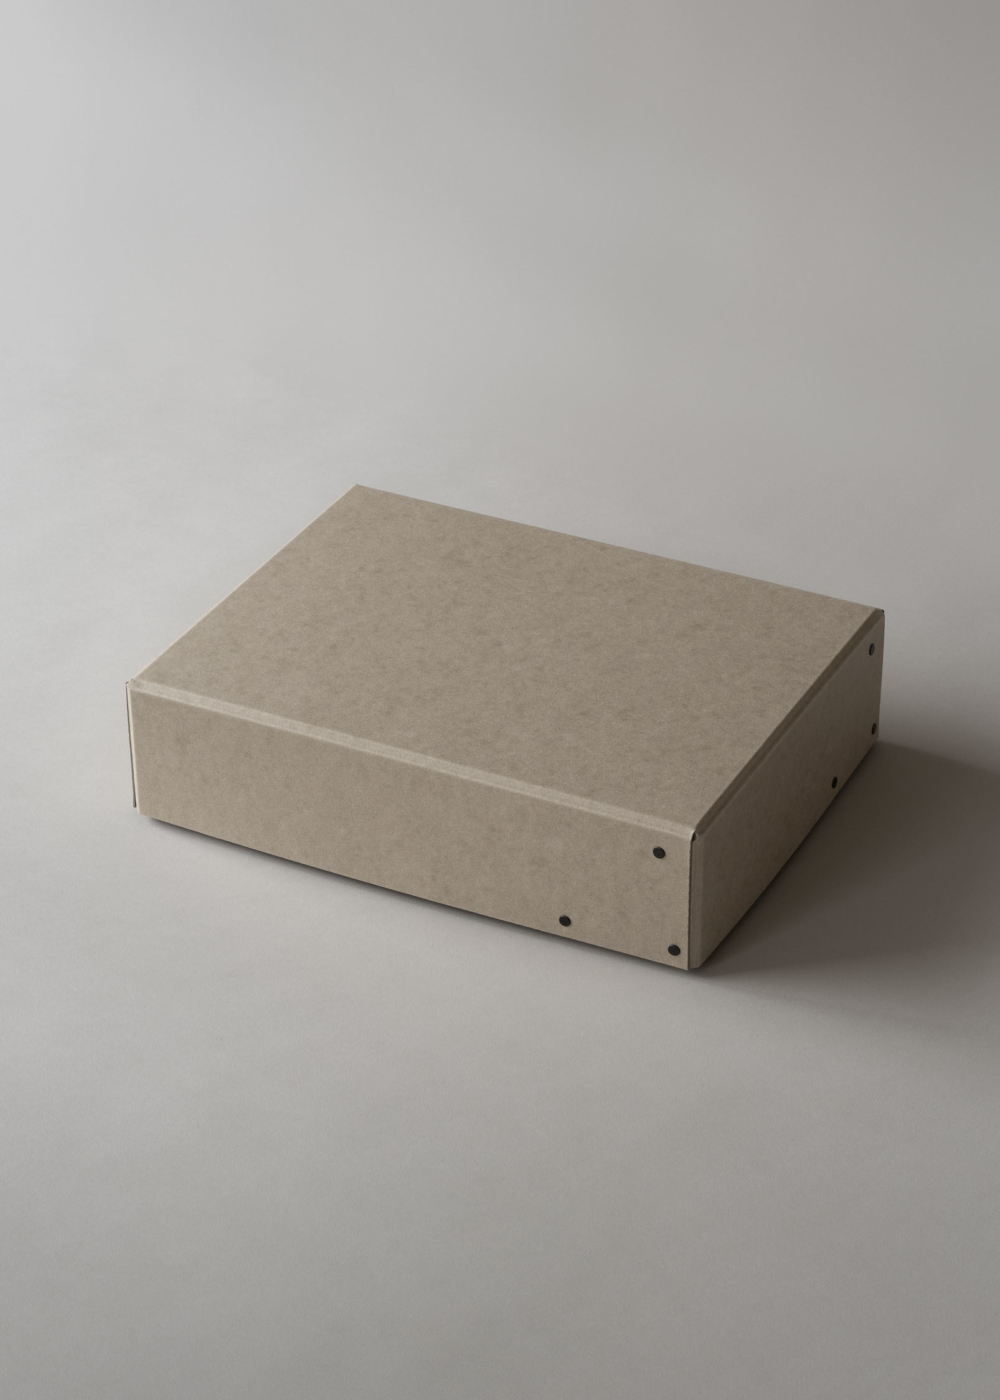 FROME Archival storage box "Rivet Box" - Kraft